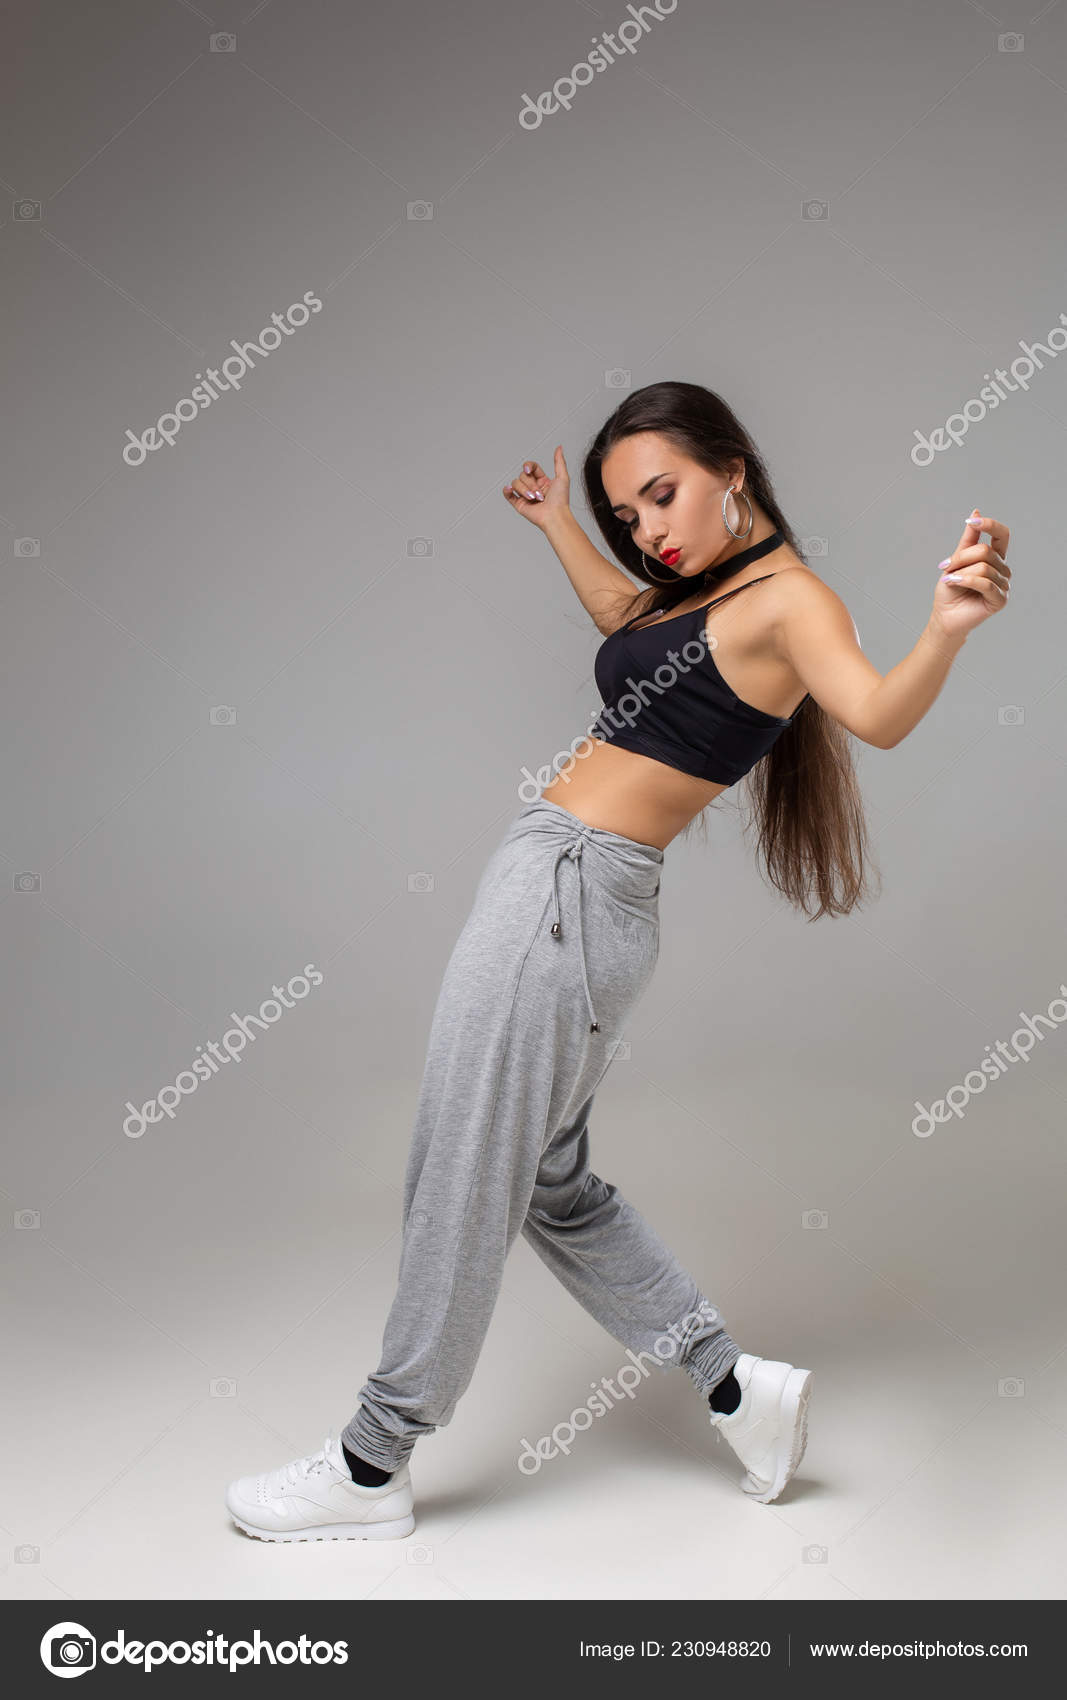 Cool Looking Hip-hop Dancer Posing On Stock Photo 14451631 | Shutterstock